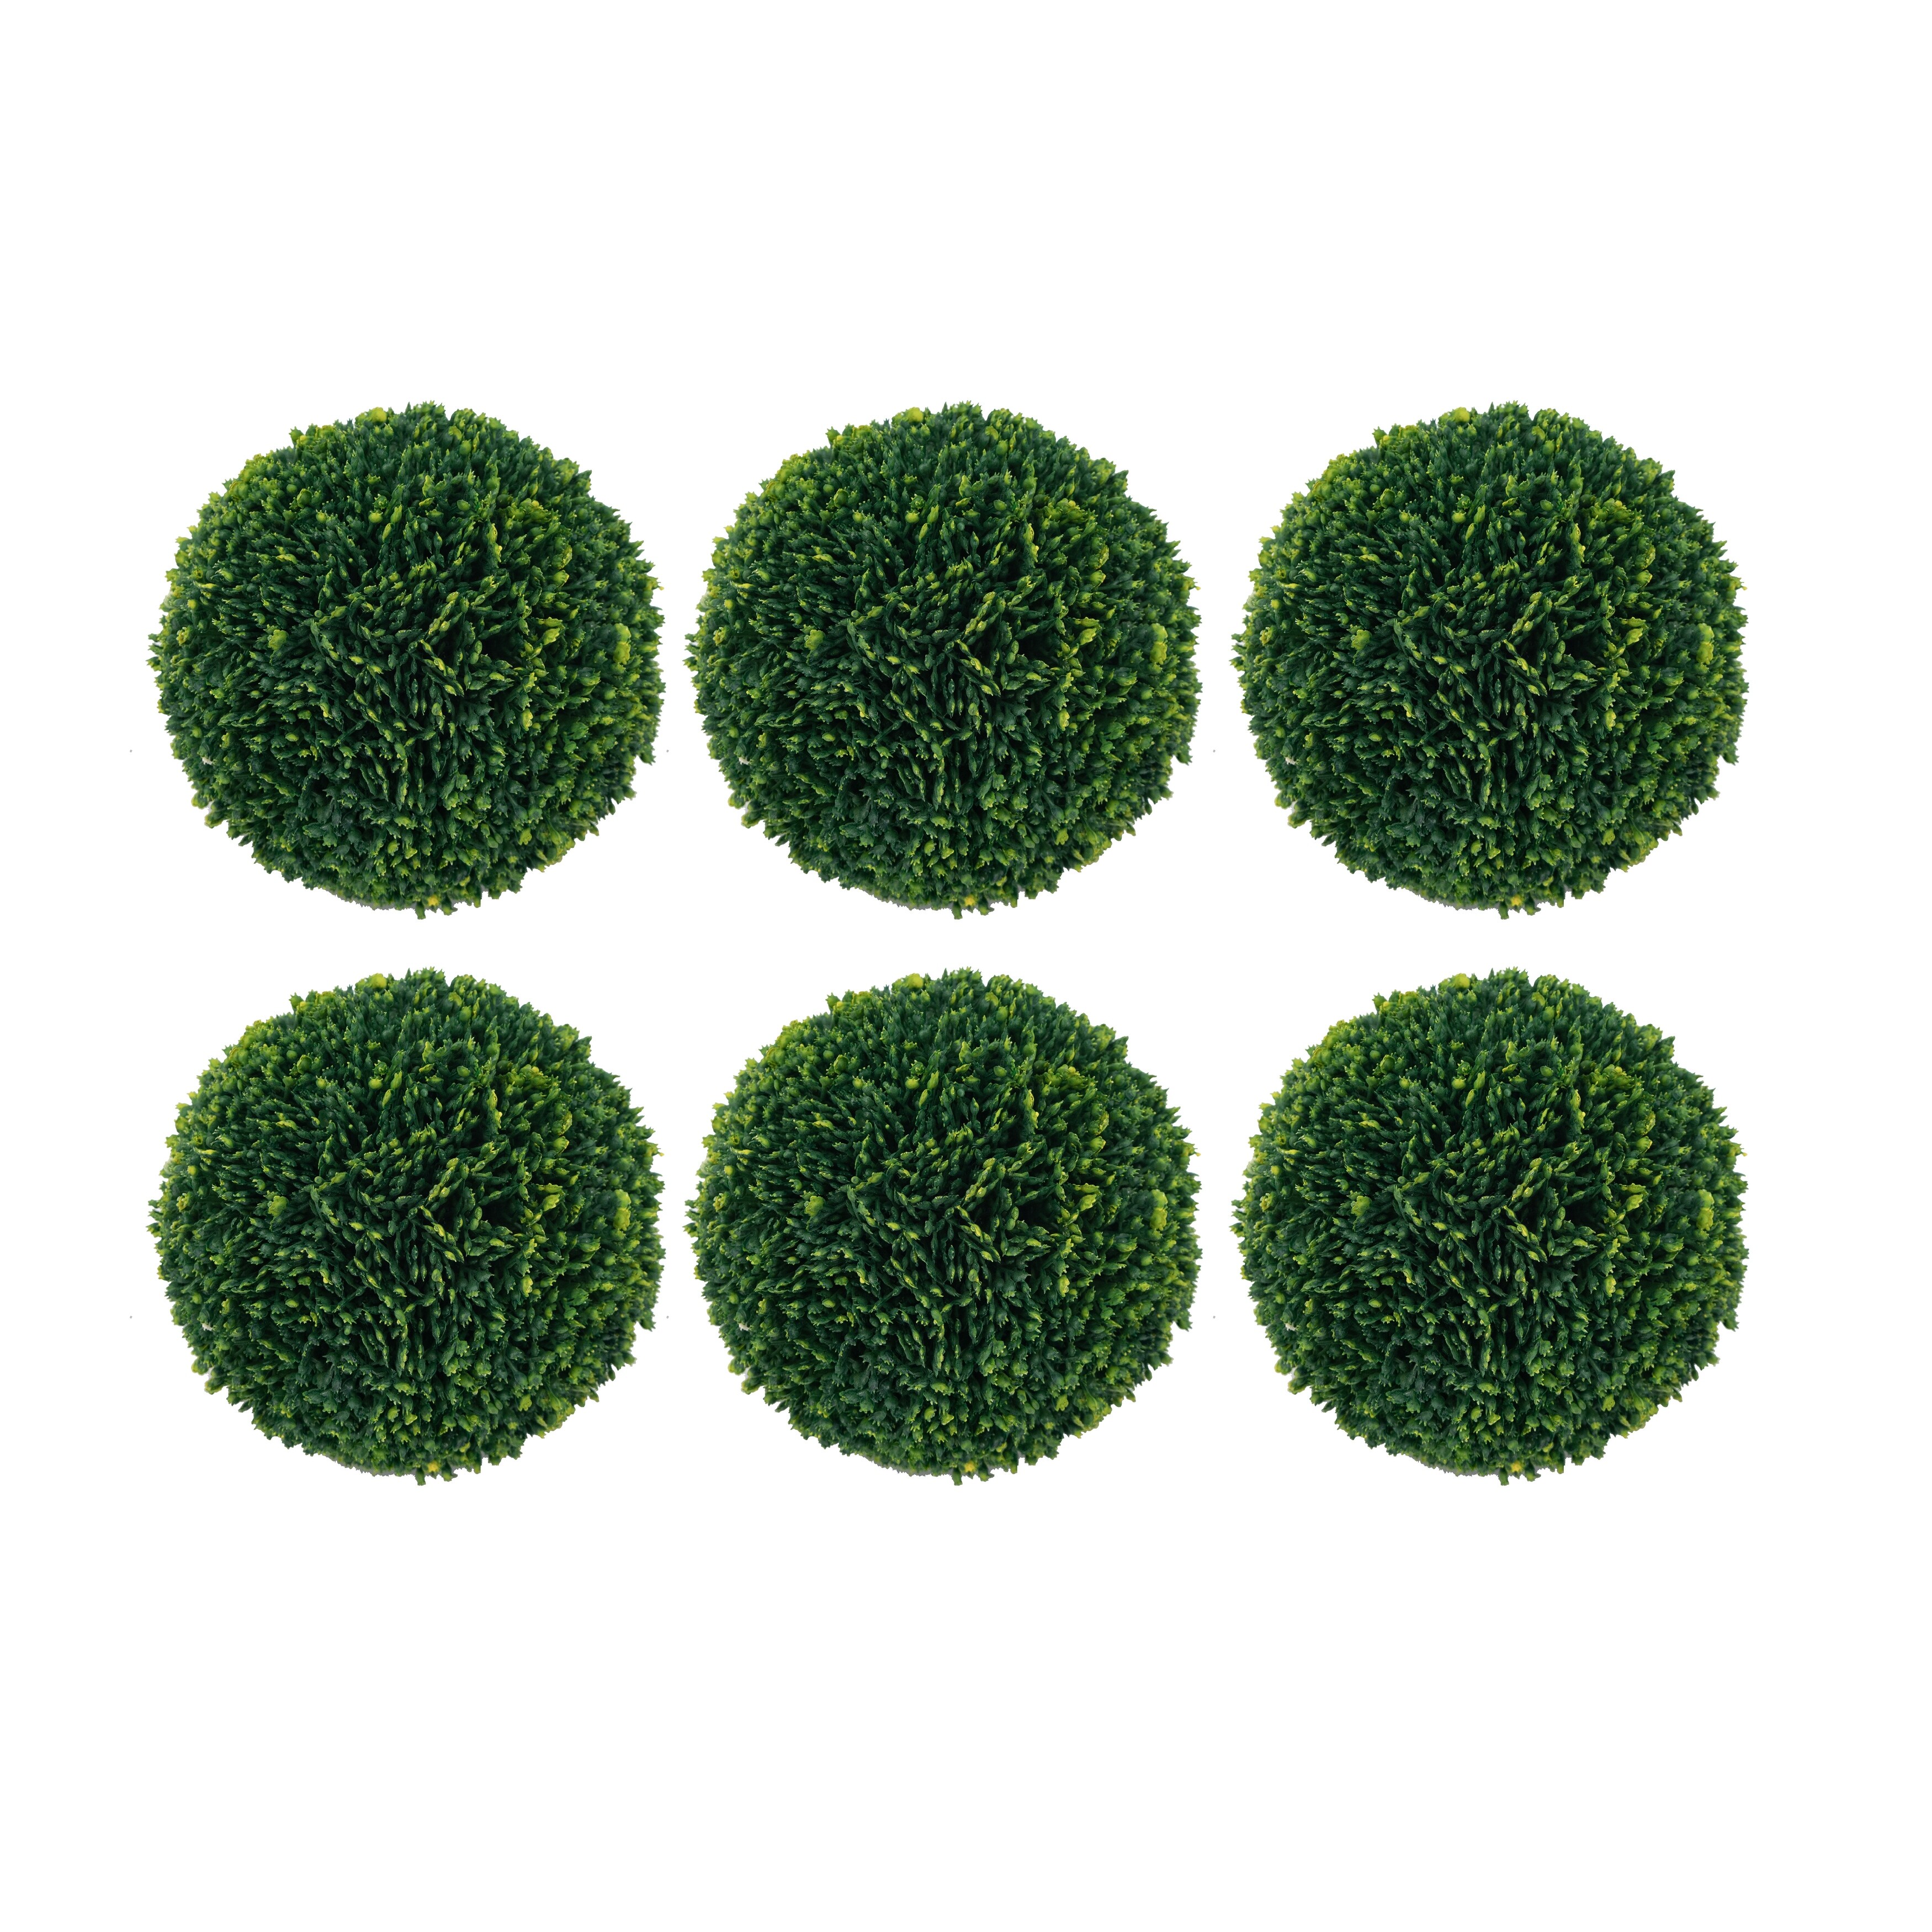 Faux Boxwood Ball Bowl Filler - Set of 6 - 4"Dia. - Green